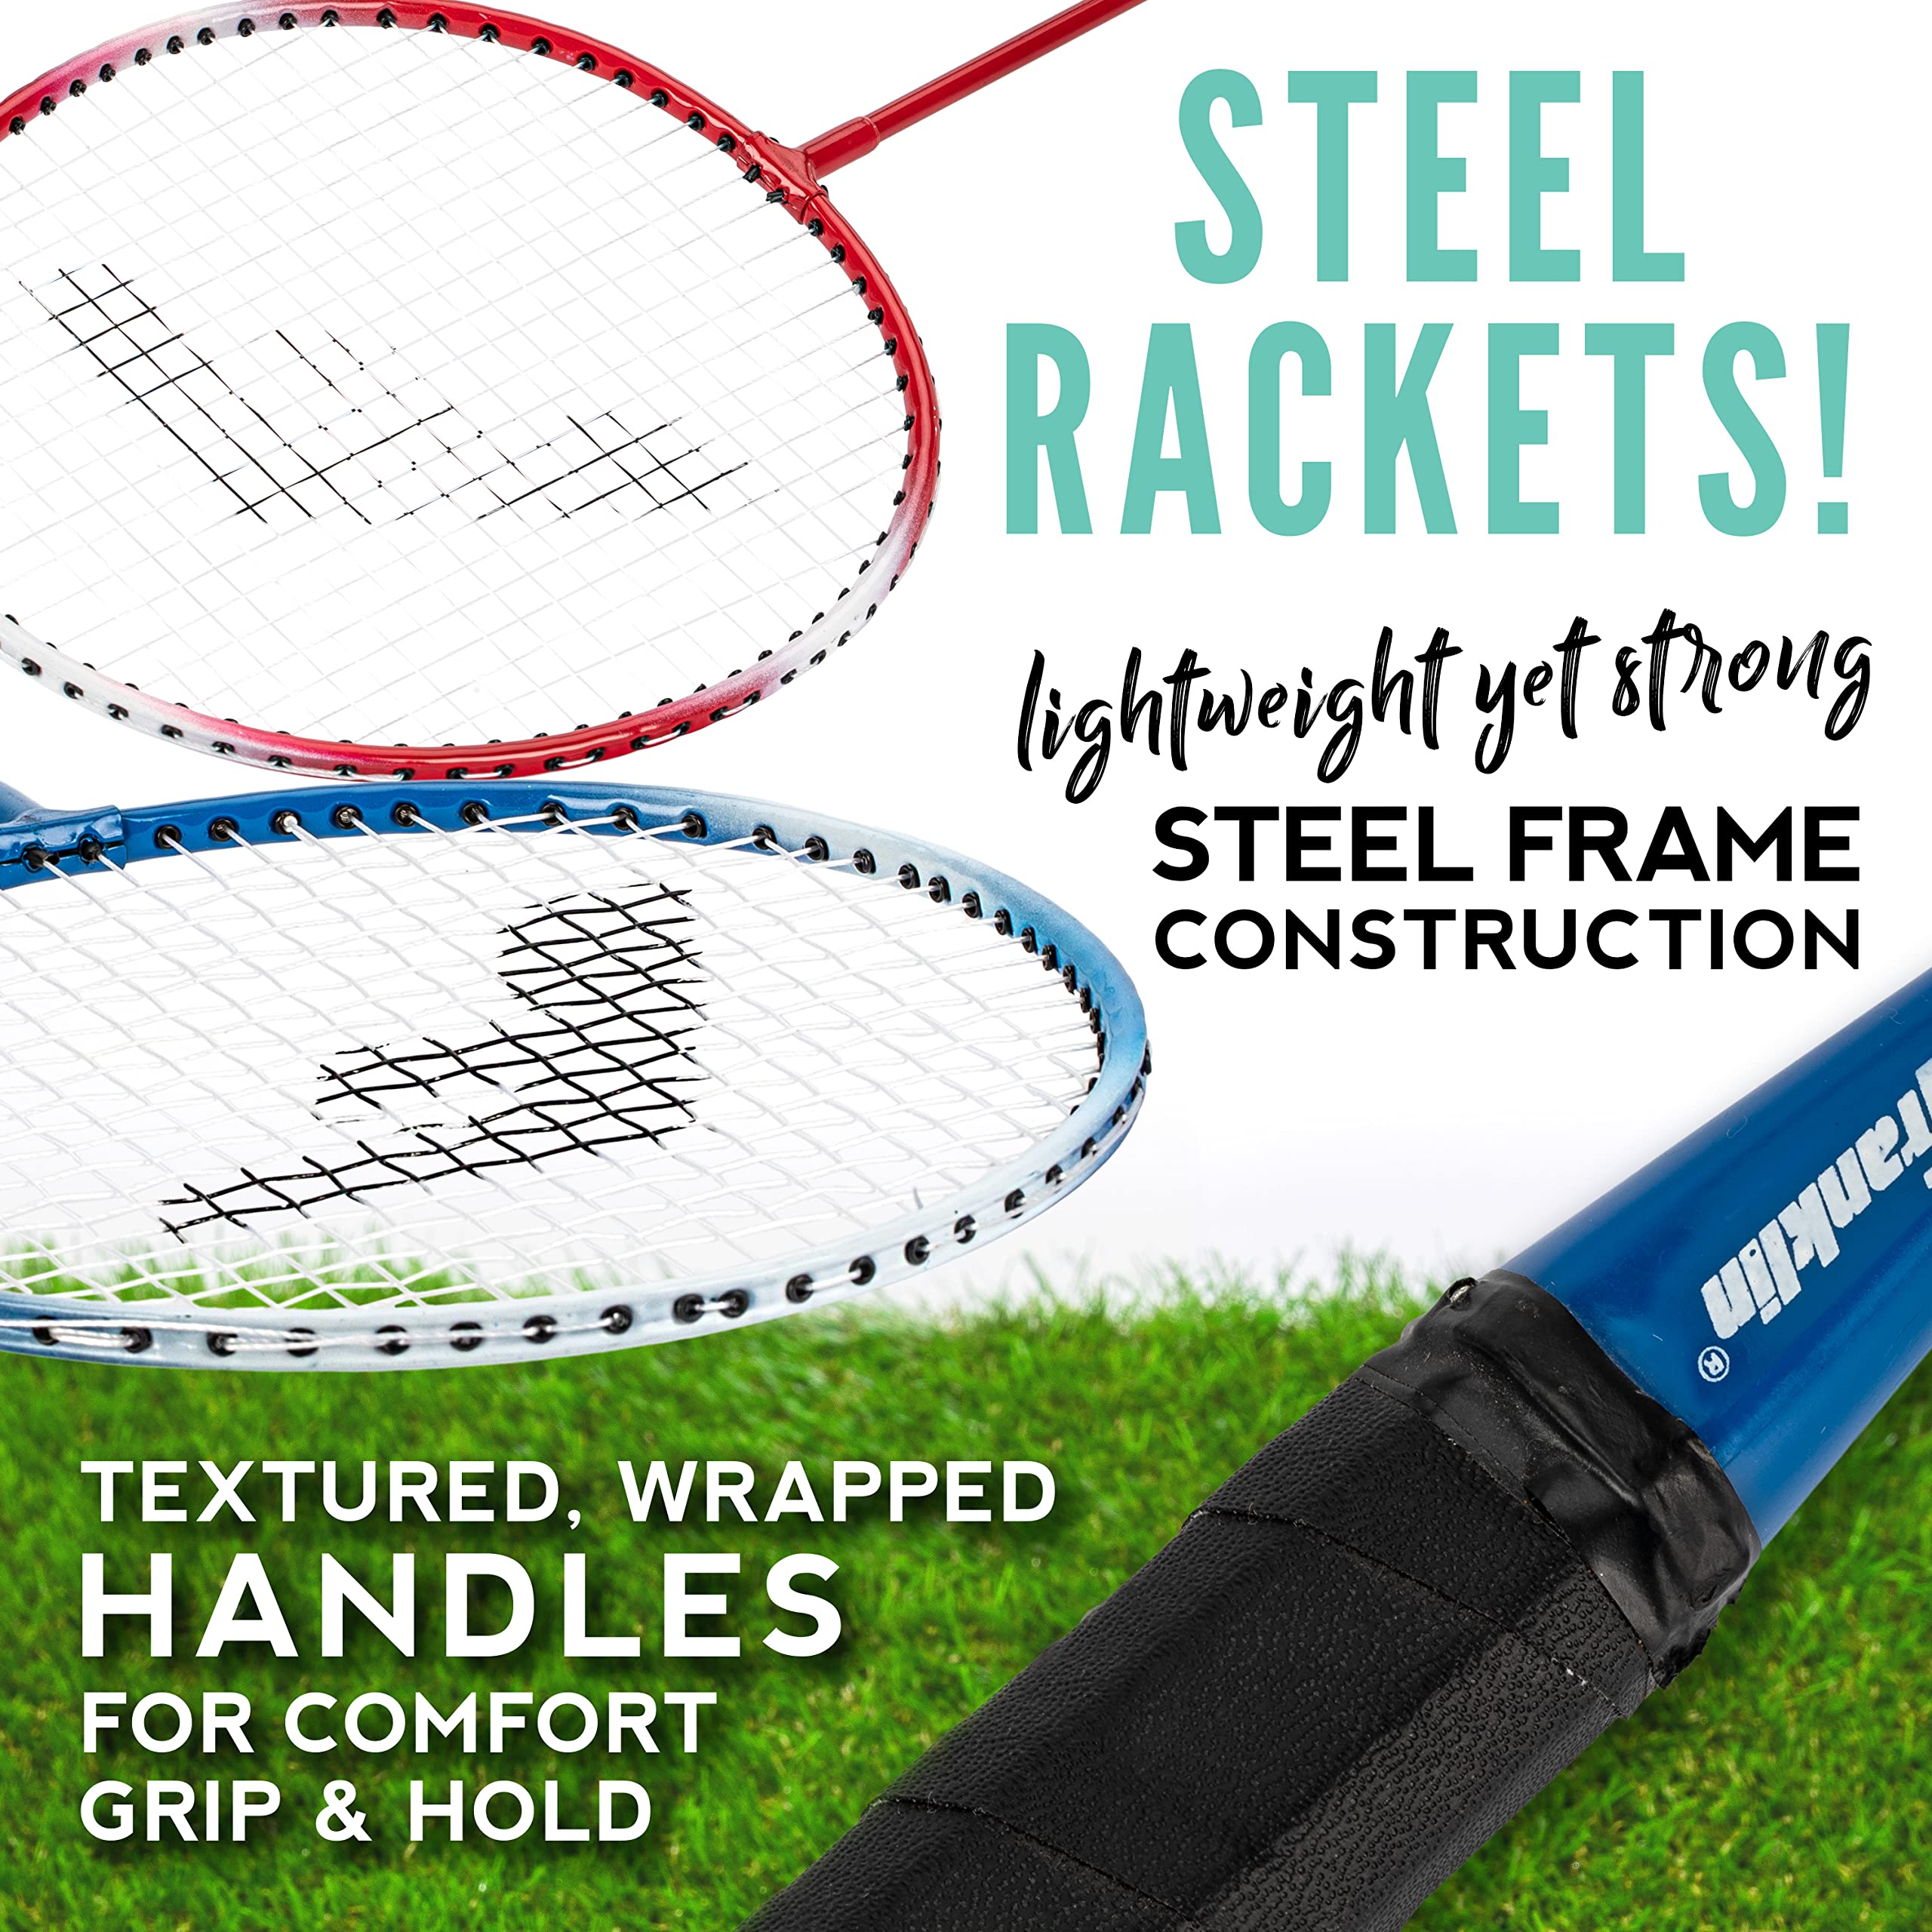 Franklin Sports Badminton Racket + Birdie Set - Replacement Badminton Equipment for Kids + Adults - 2 Player - 4 Player Badminton Racket Sets